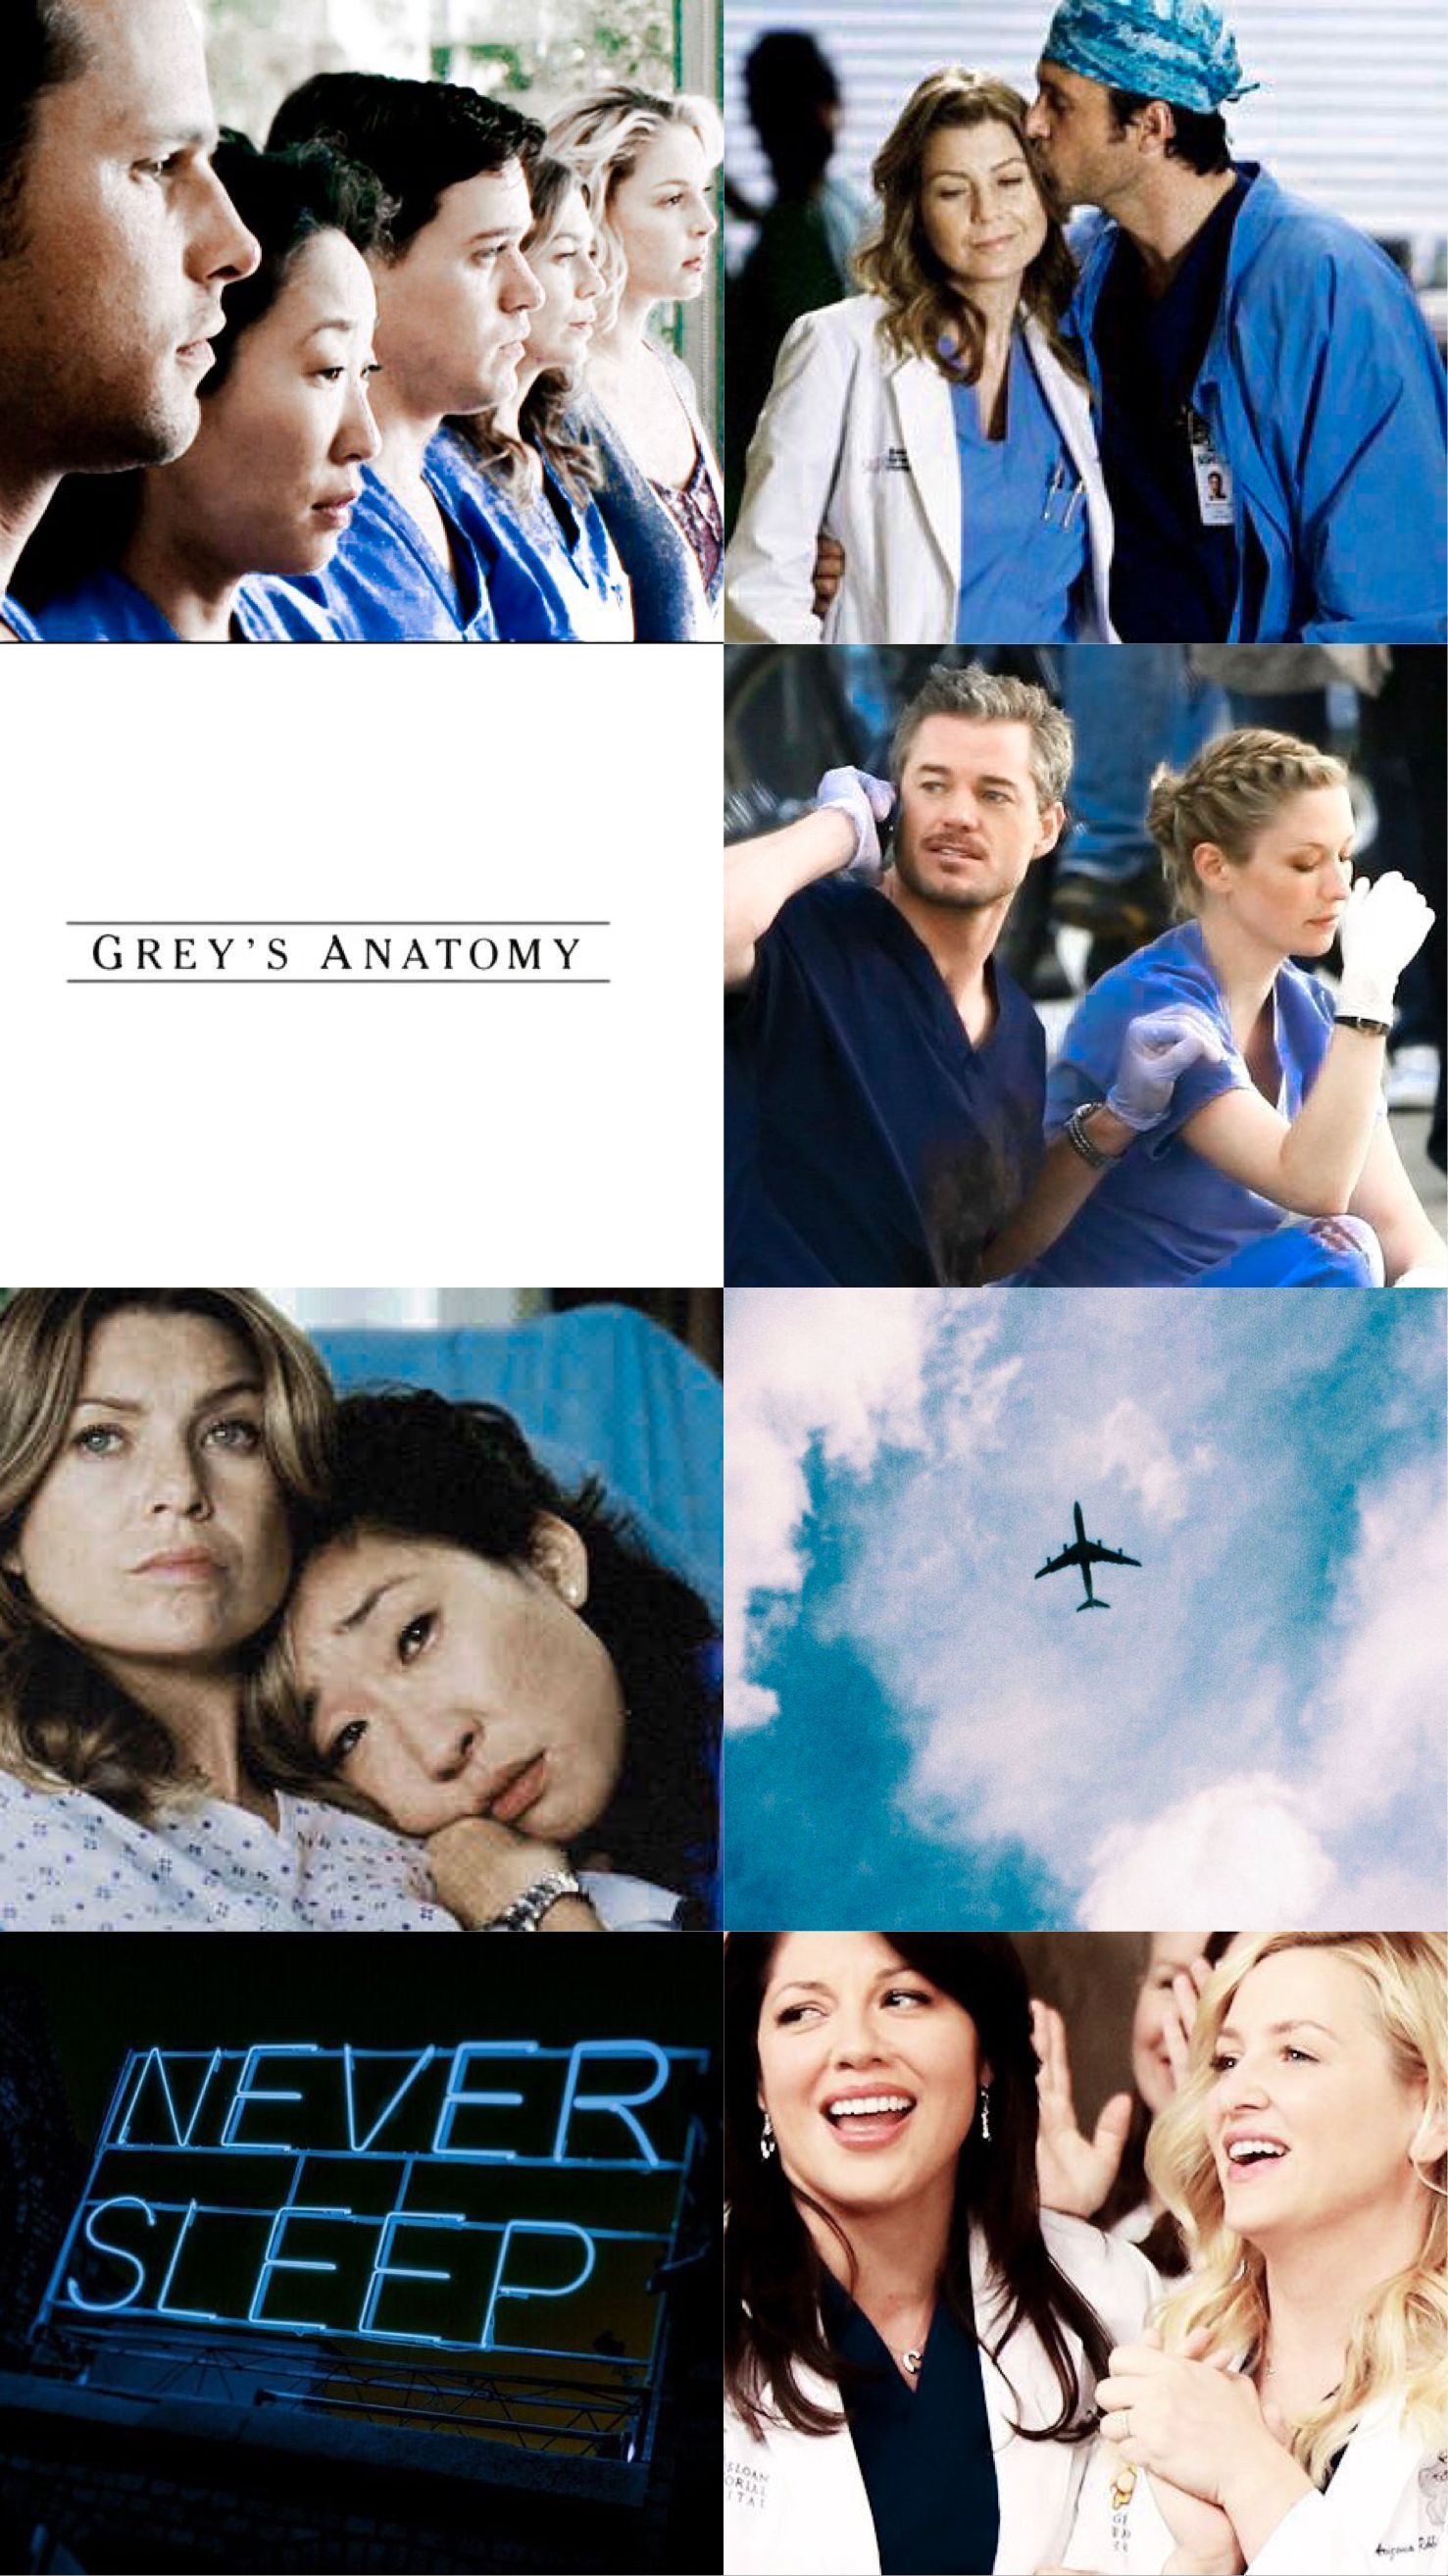 greys anatomy quotes greys anatomy, wallpaper, srie, tv, cast, blue, azul, meredith grey, cristina yang, alex karev